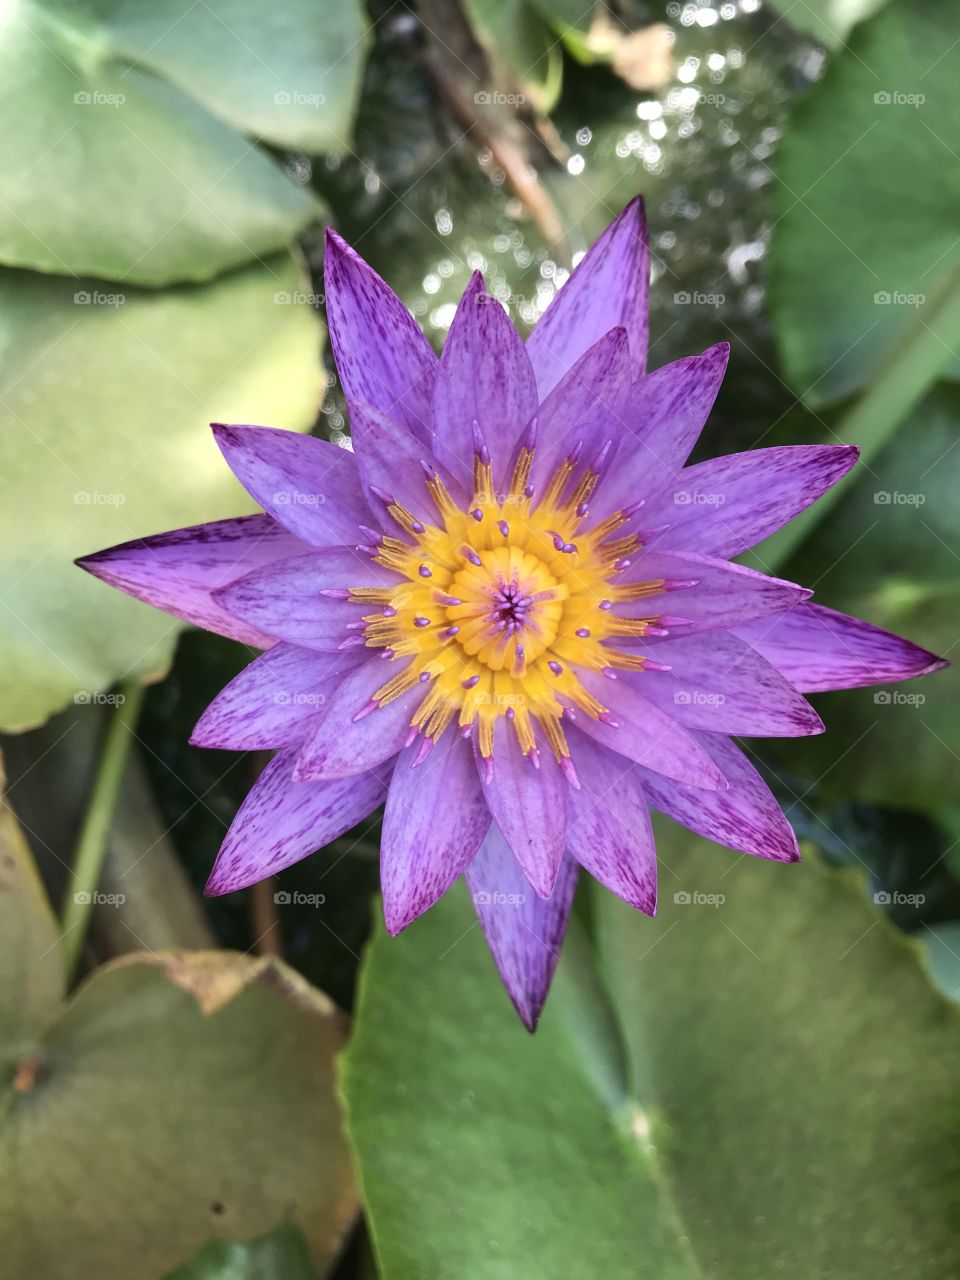 Japanese Pond Lily 